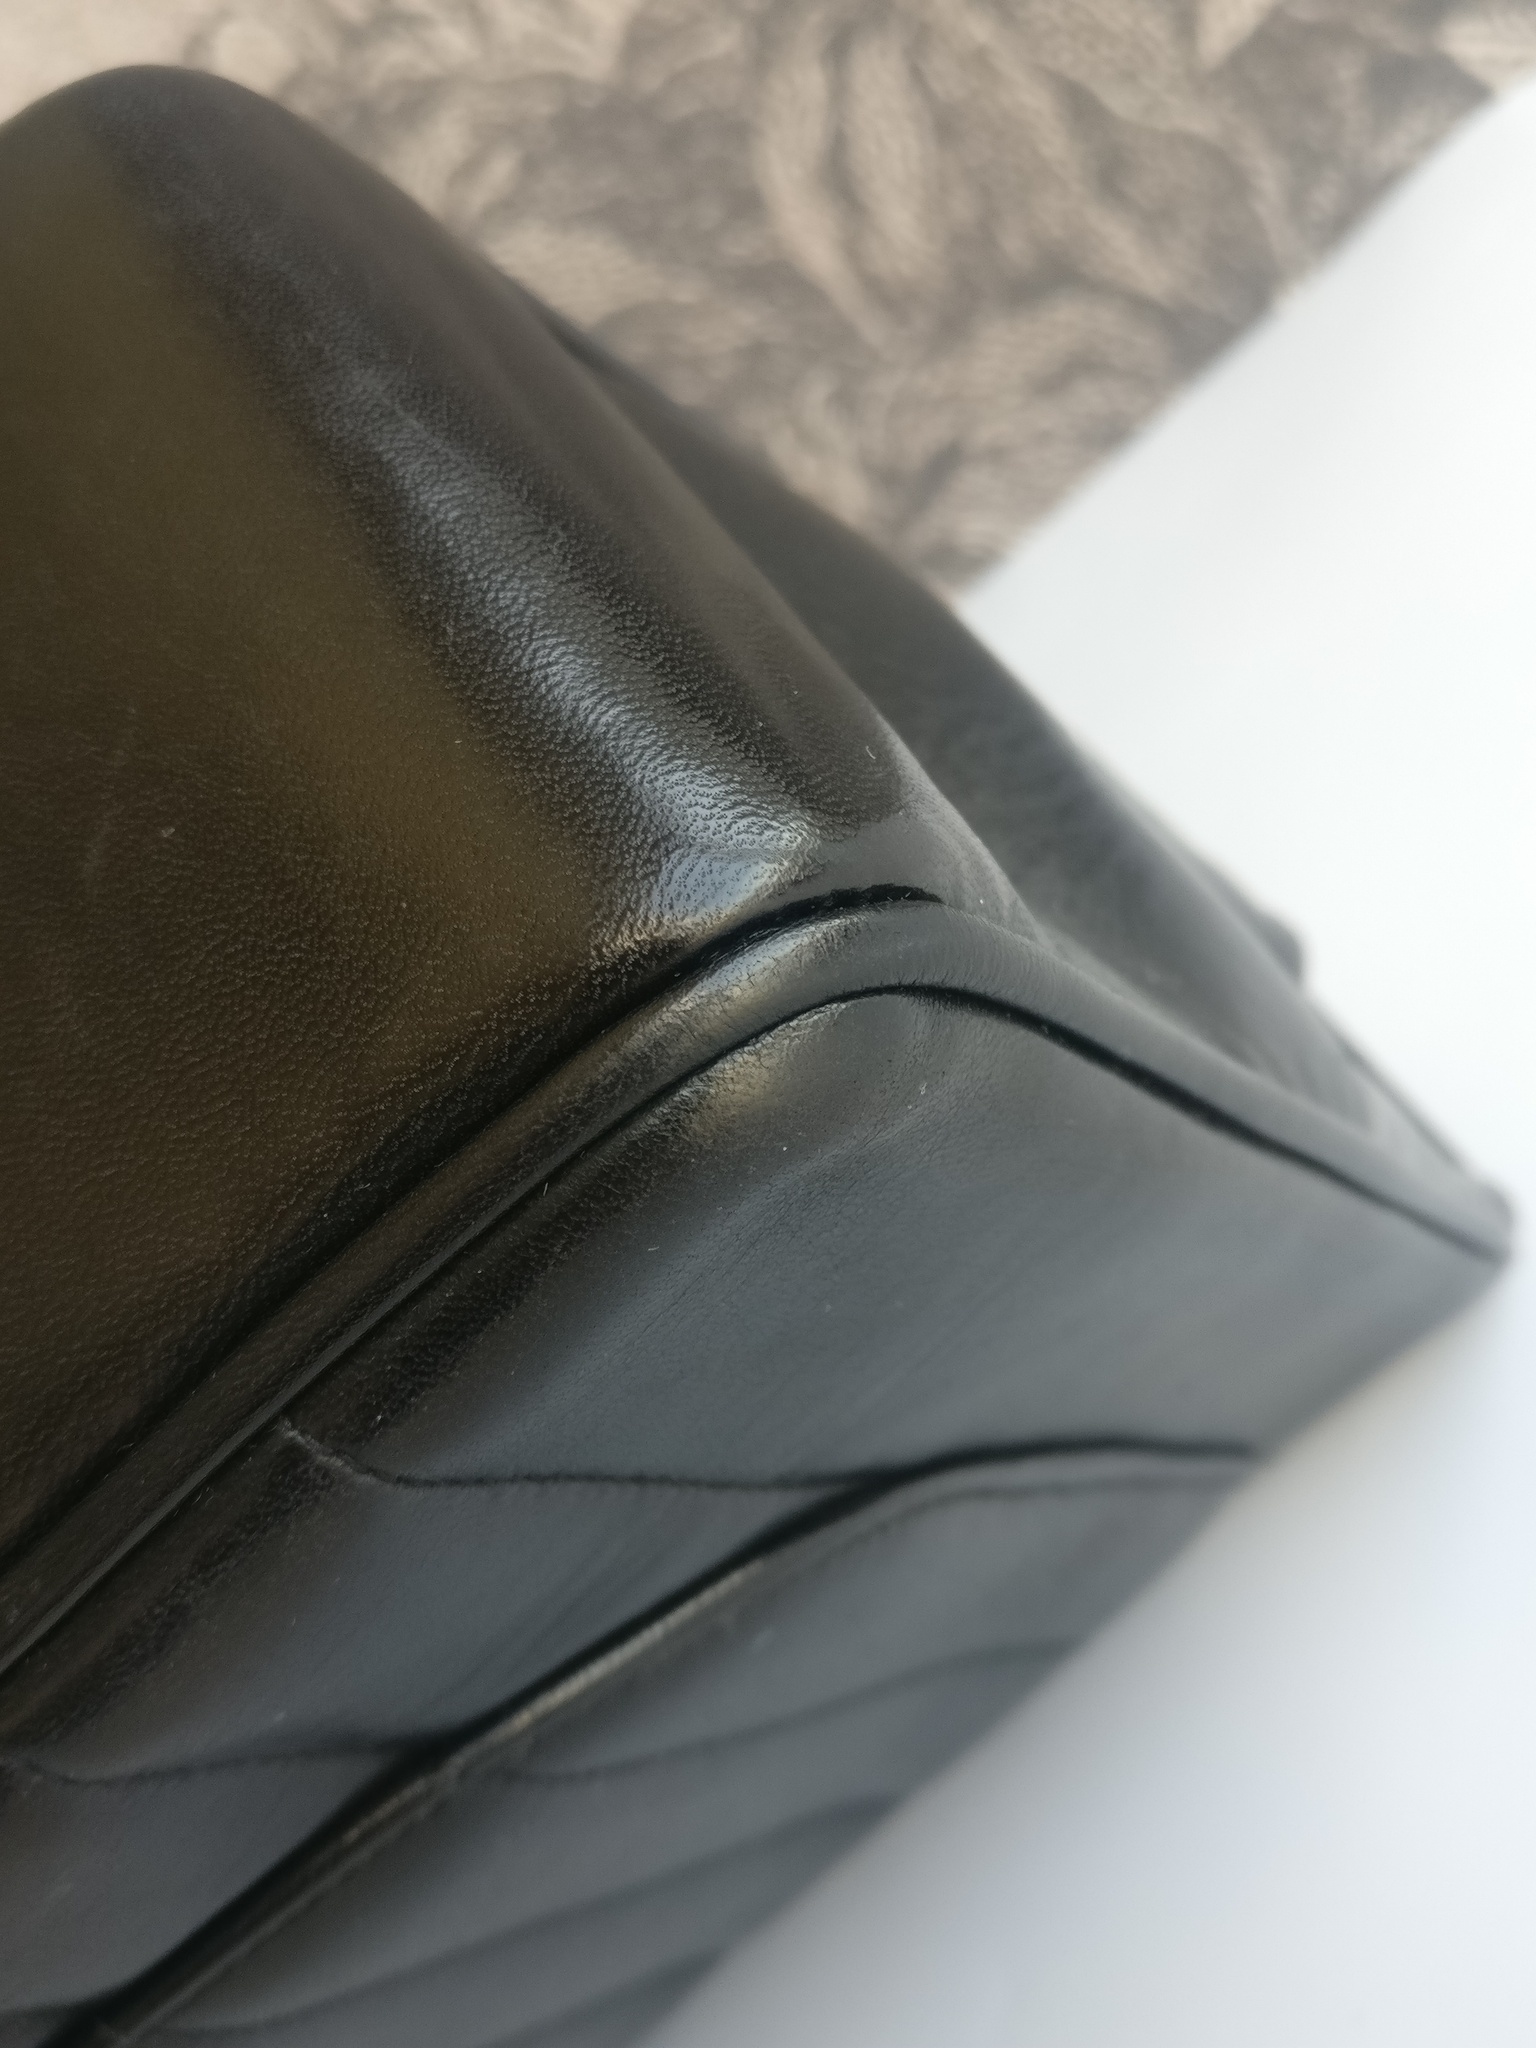 Chanel Jumbo Vertical Quilt Flap Bag